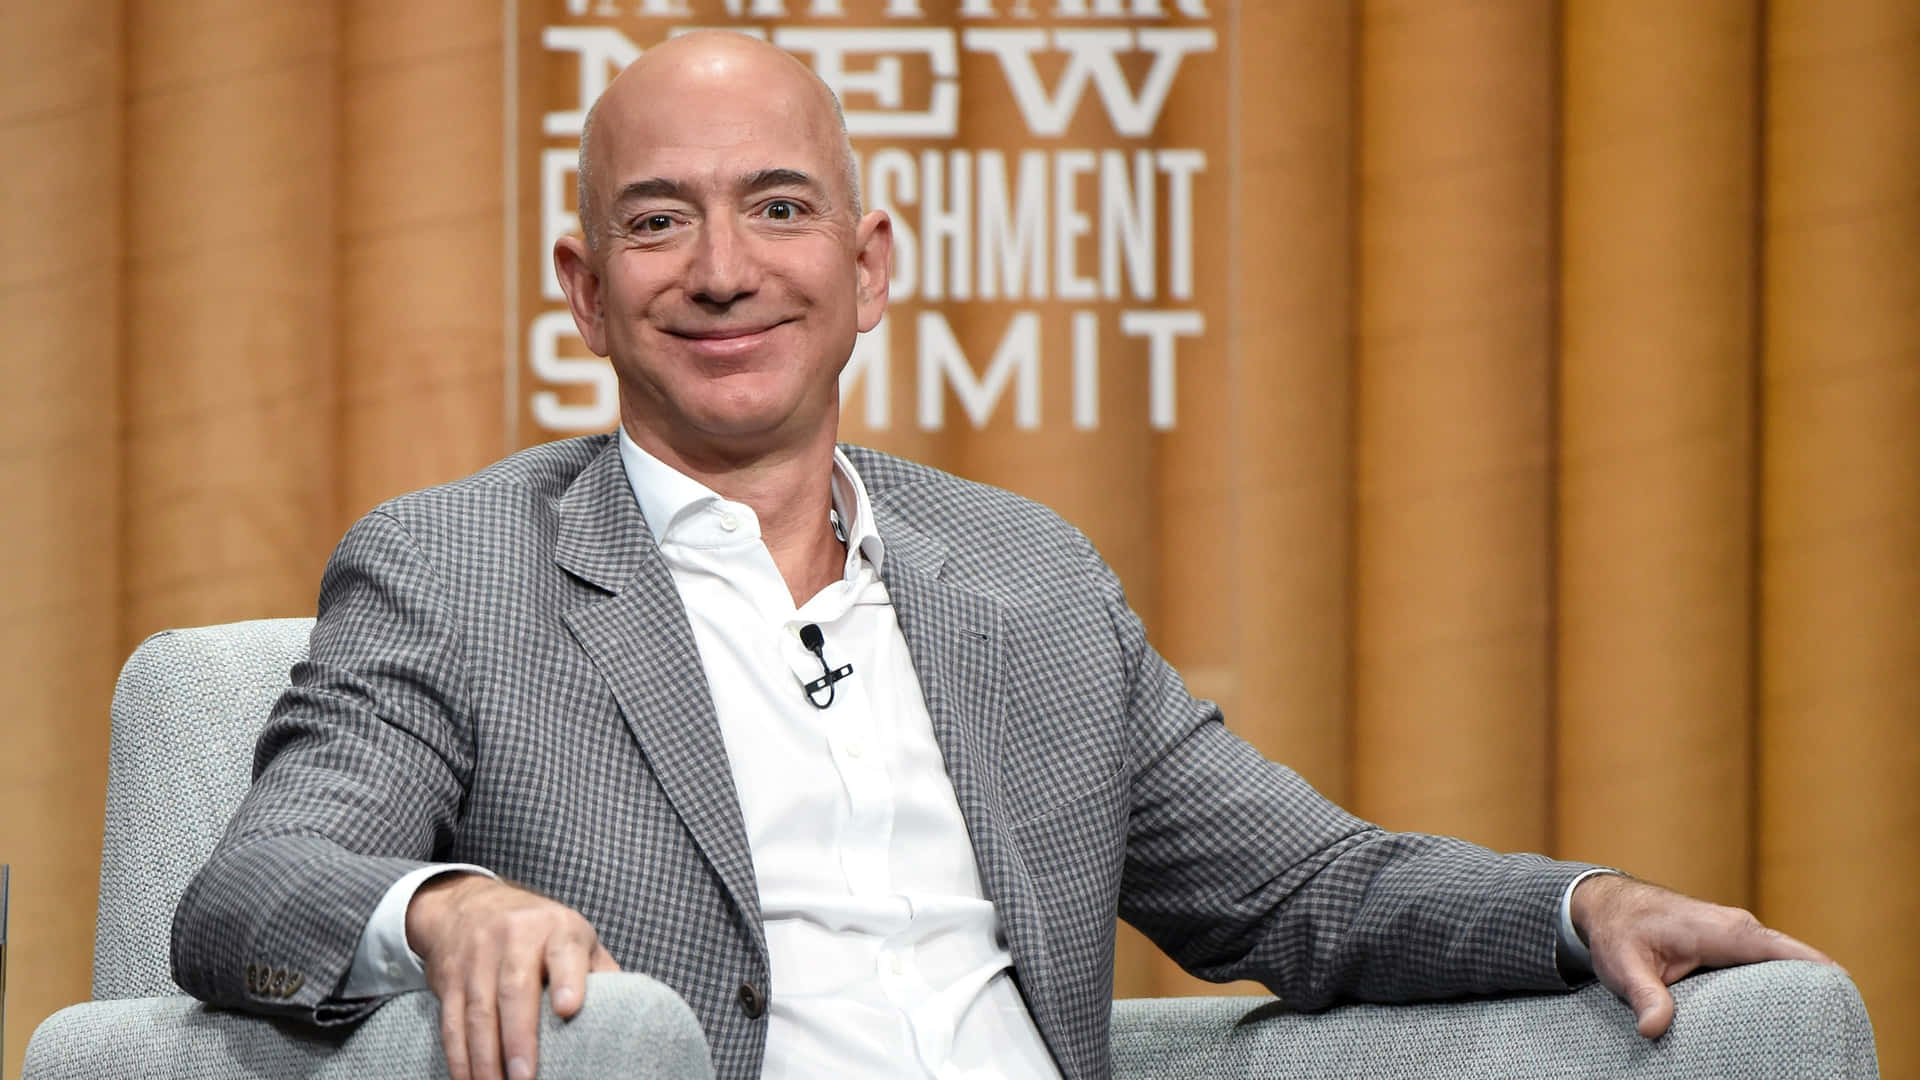 Jeff Bezos, Founder, and CEO of Amazon